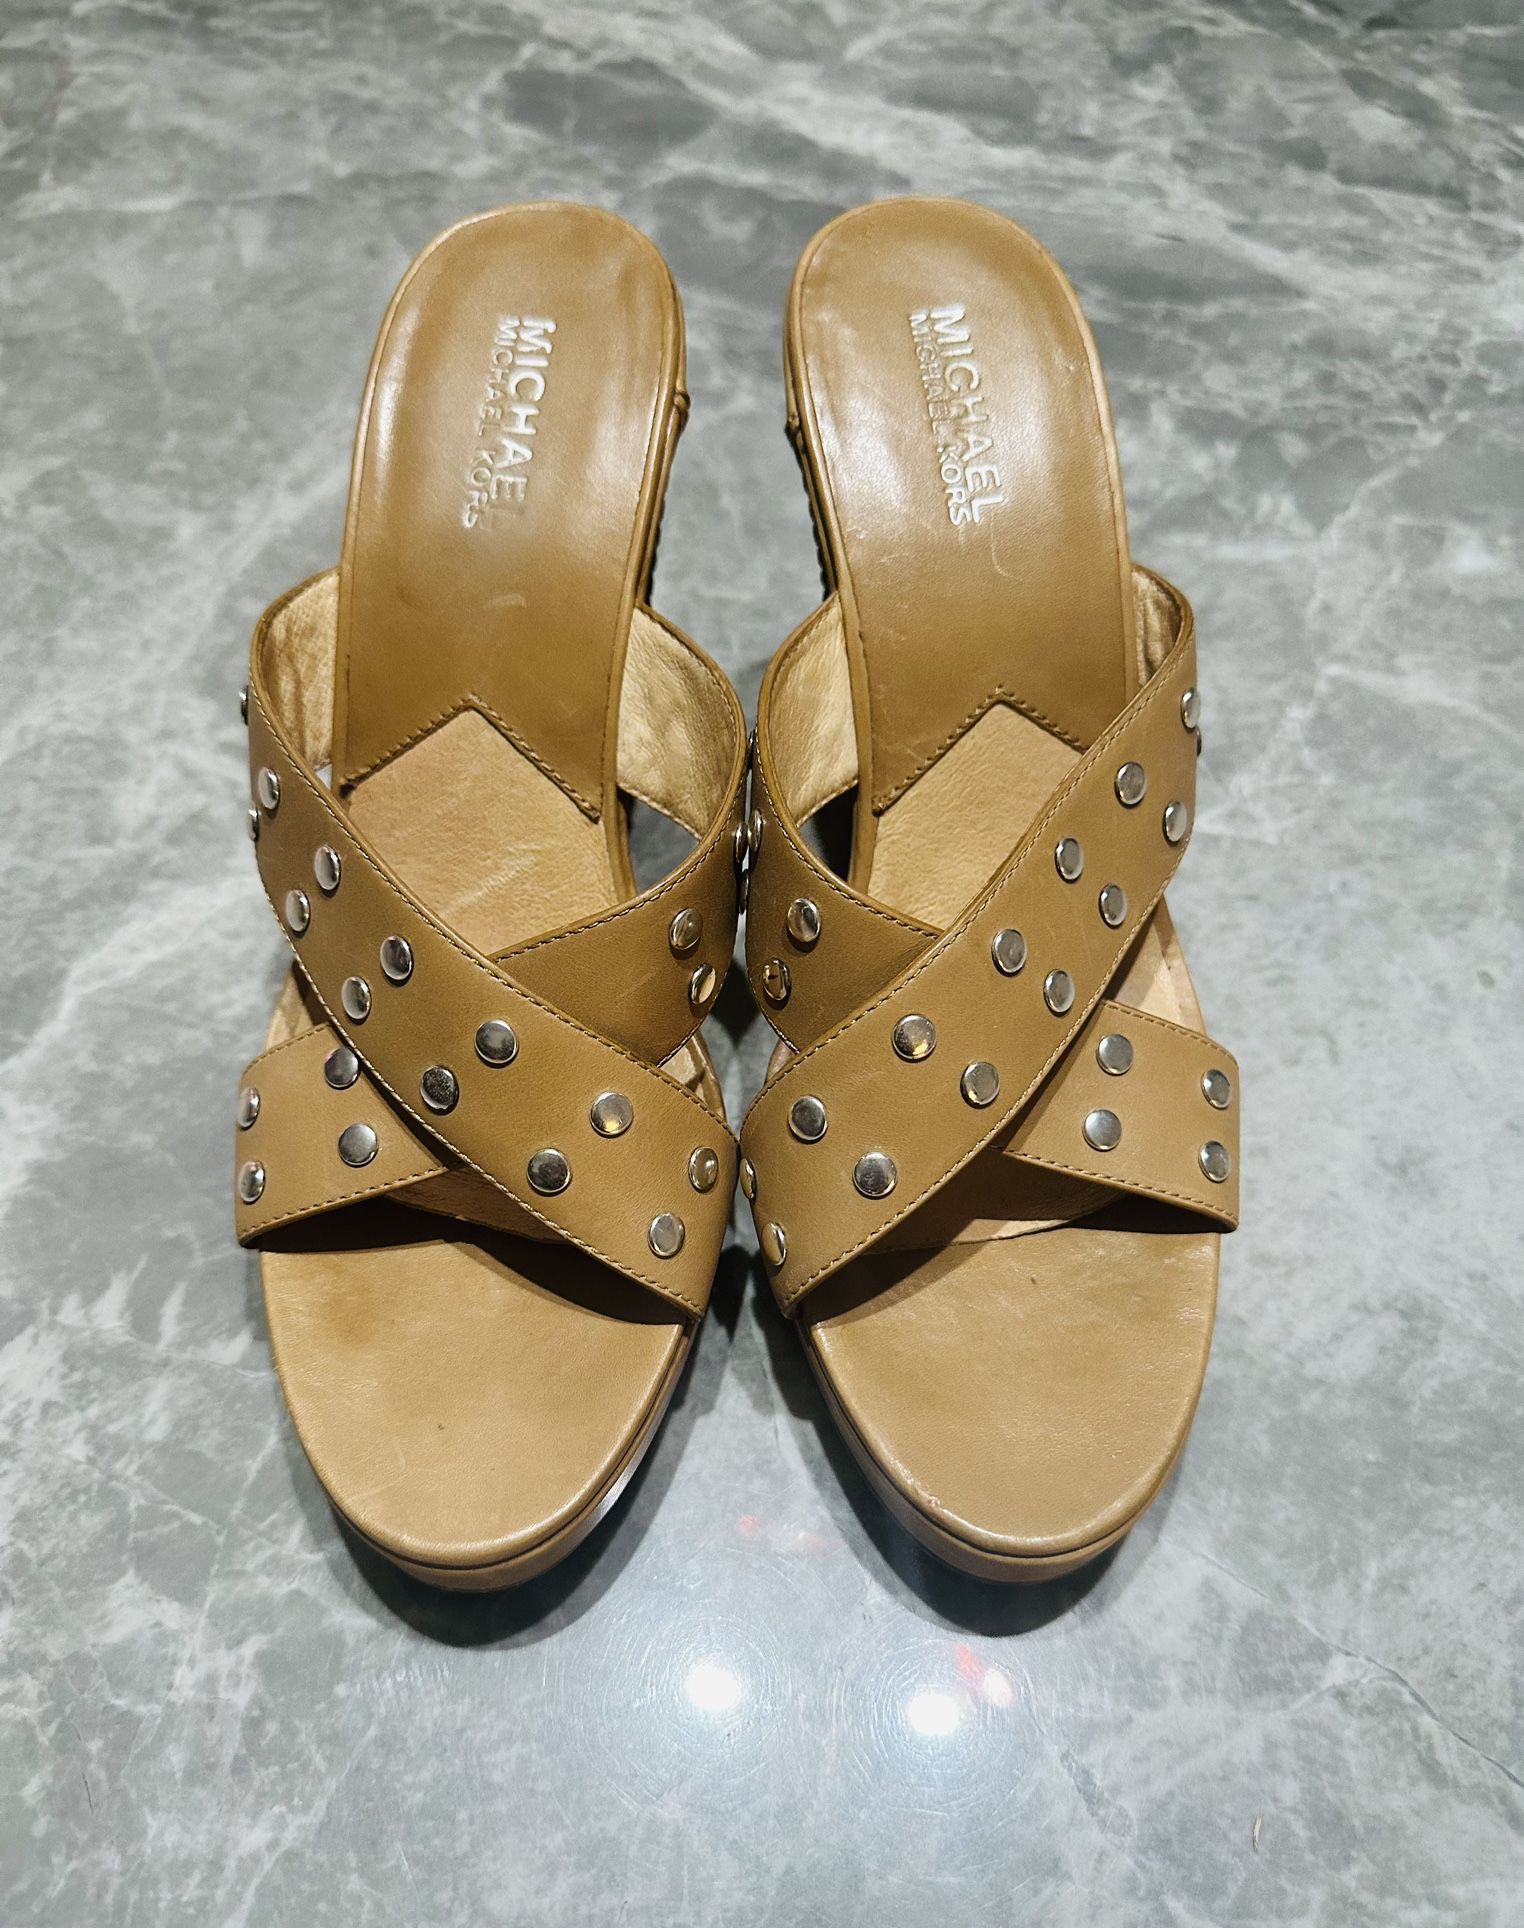 Michael Kors 4” High Wedge SZ 8M Crisscross Strap Tan Studded Leather Sandals